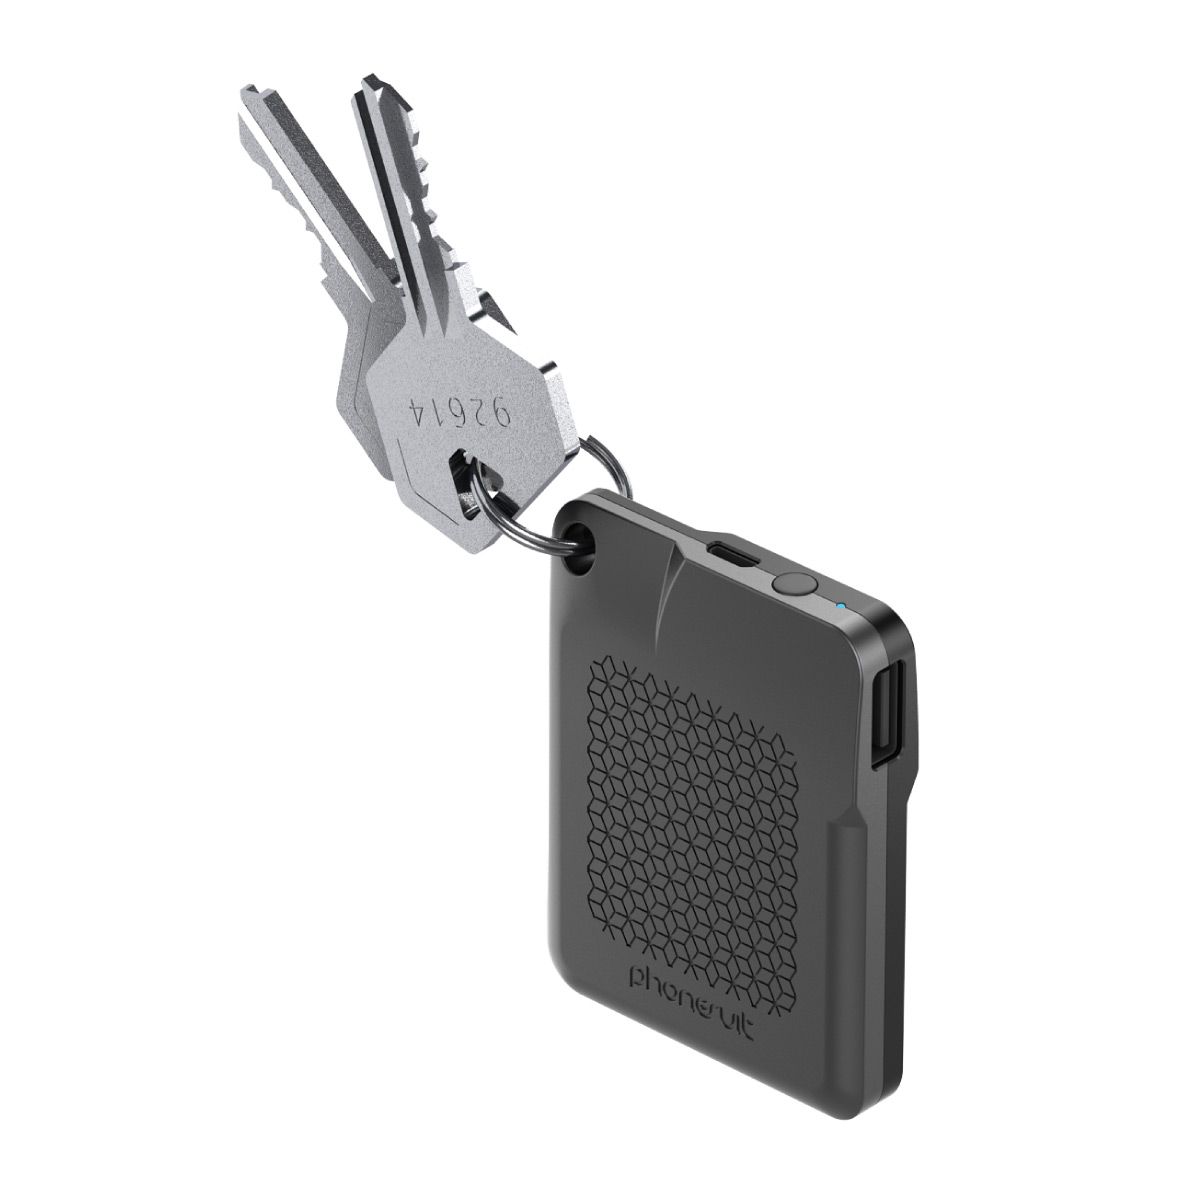 PS-FLXCRD-26-BLK FlexCard Pocket Charger - 2600